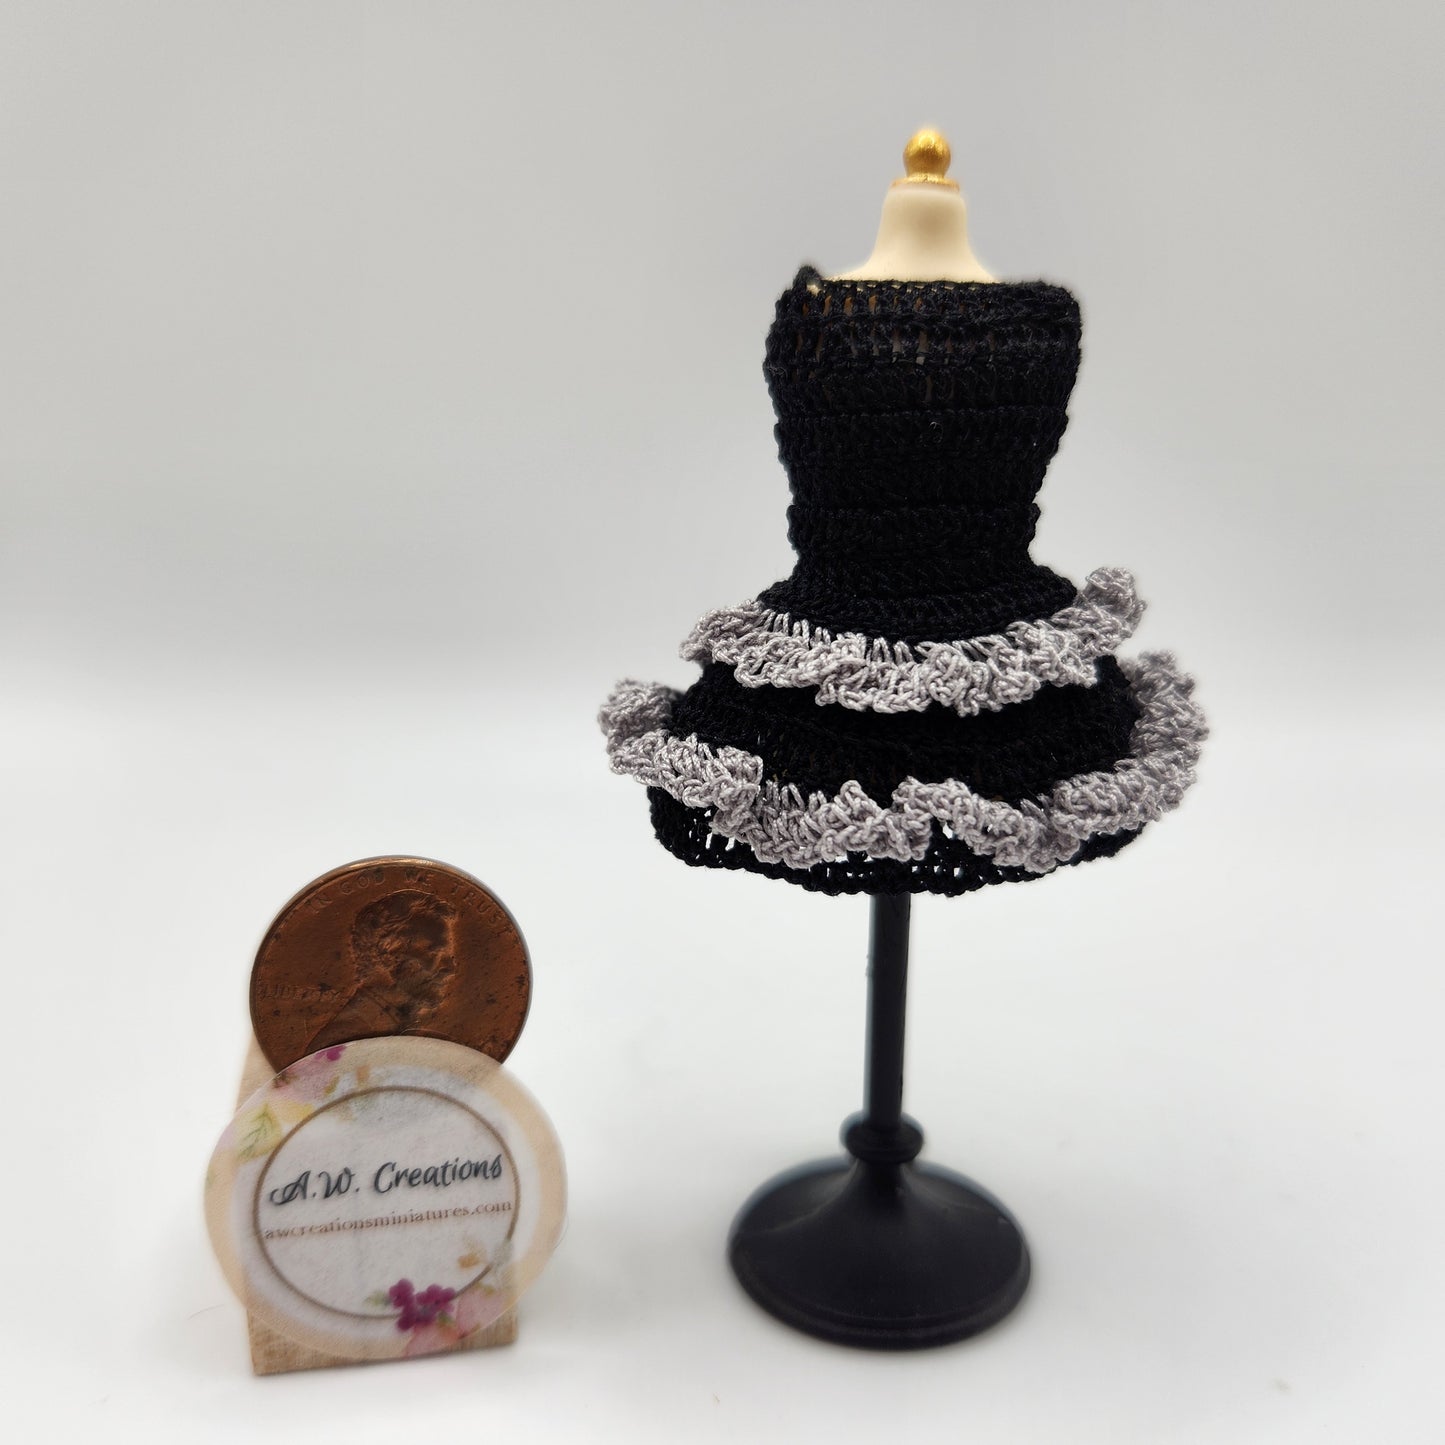 Dress - Black & Gray Crocheted Cocktail Dress